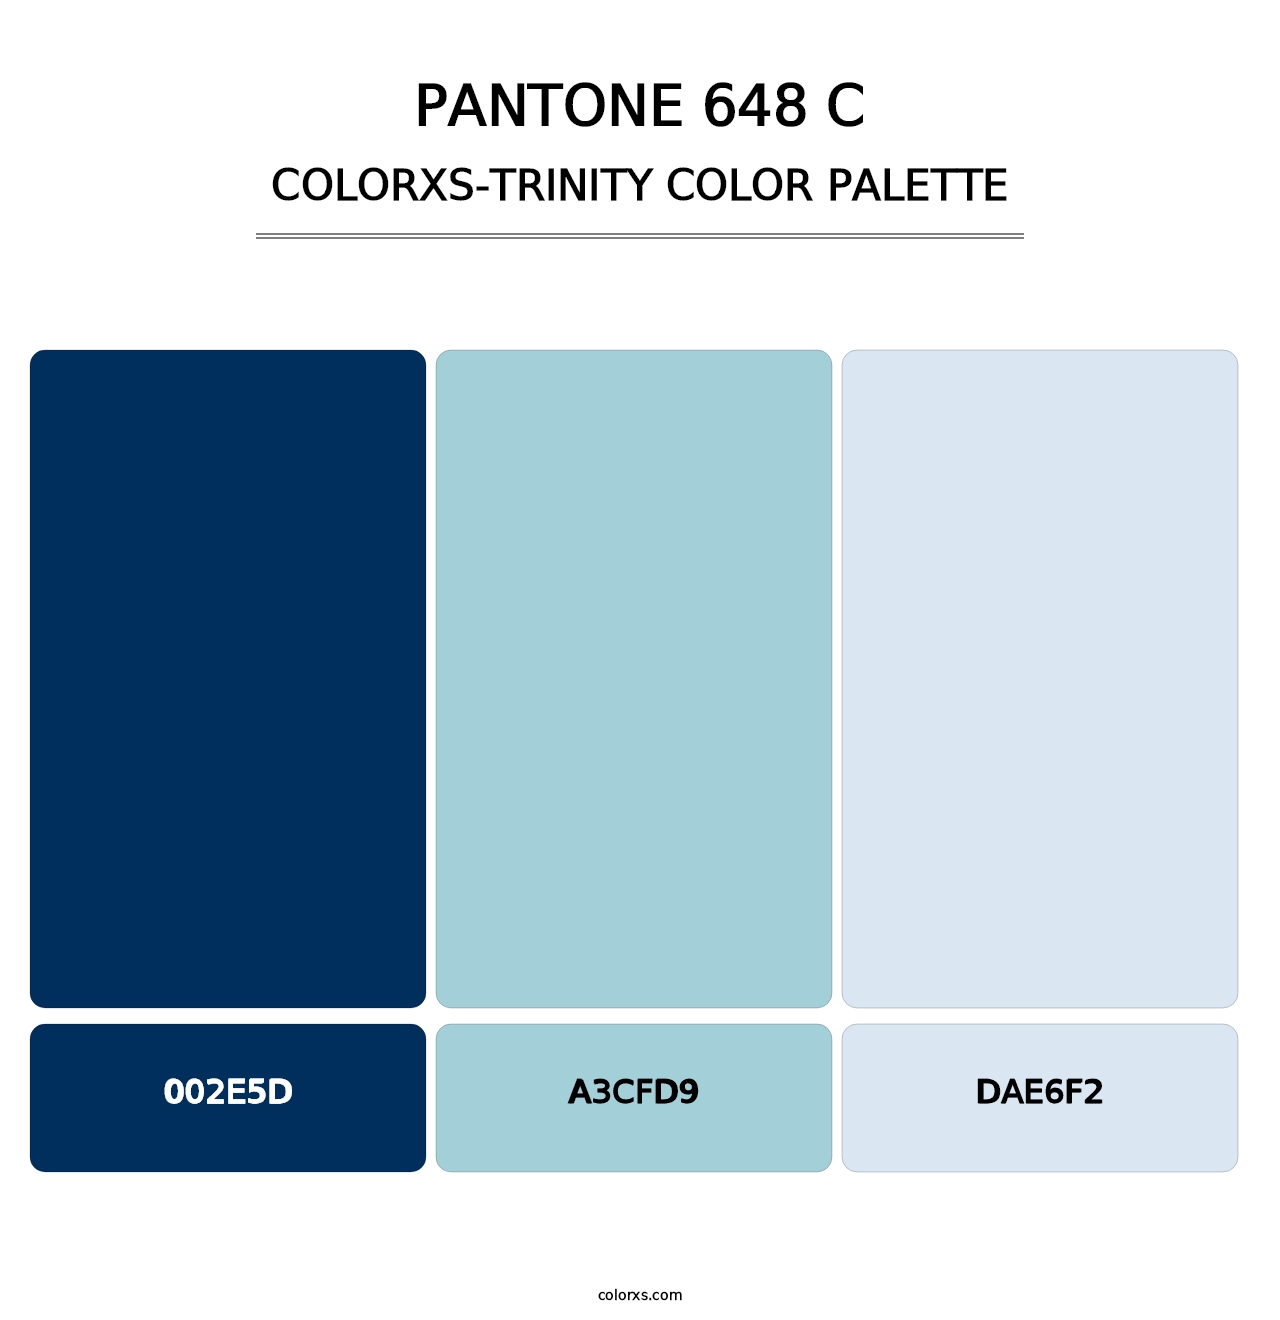 PANTONE 648 C - Colorxs Trinity Palette